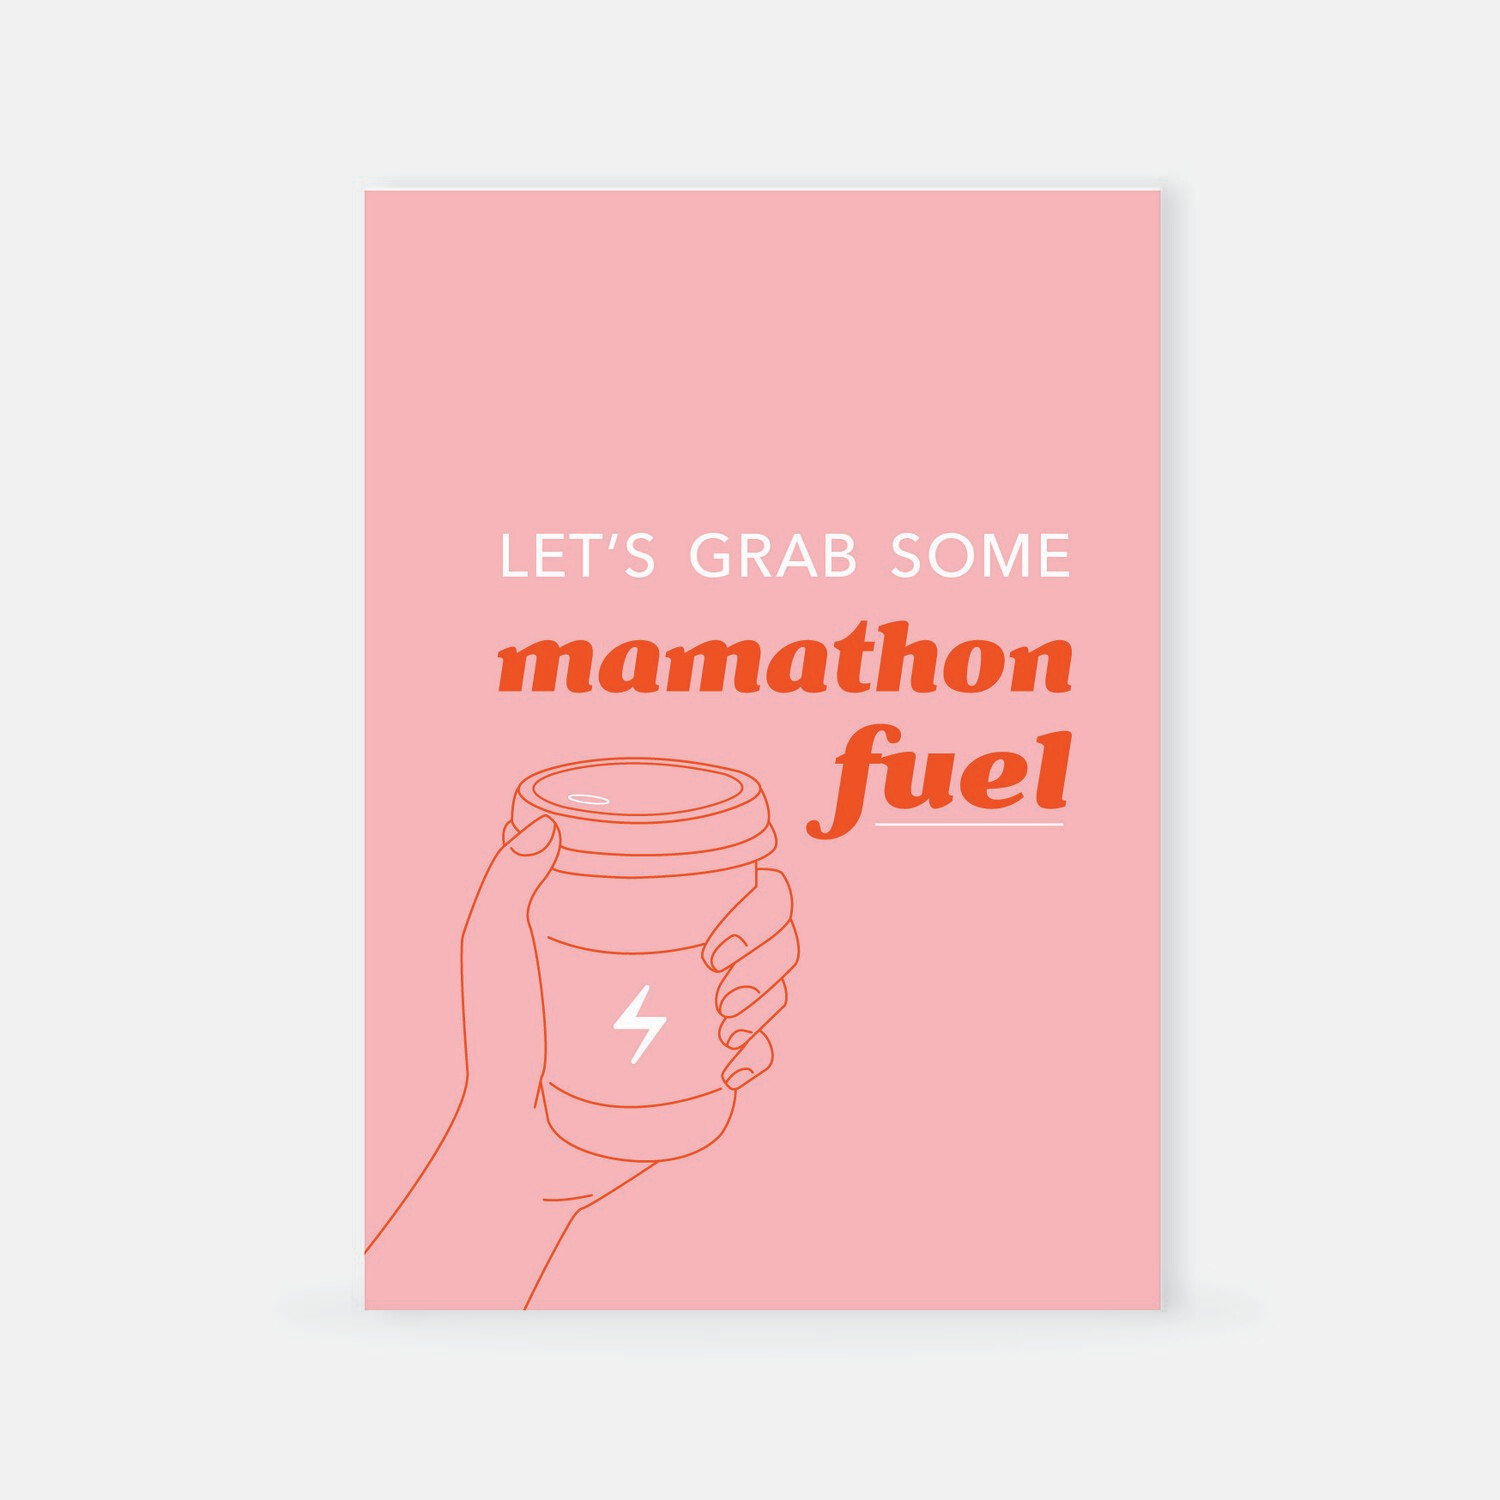 Mamathon fuel